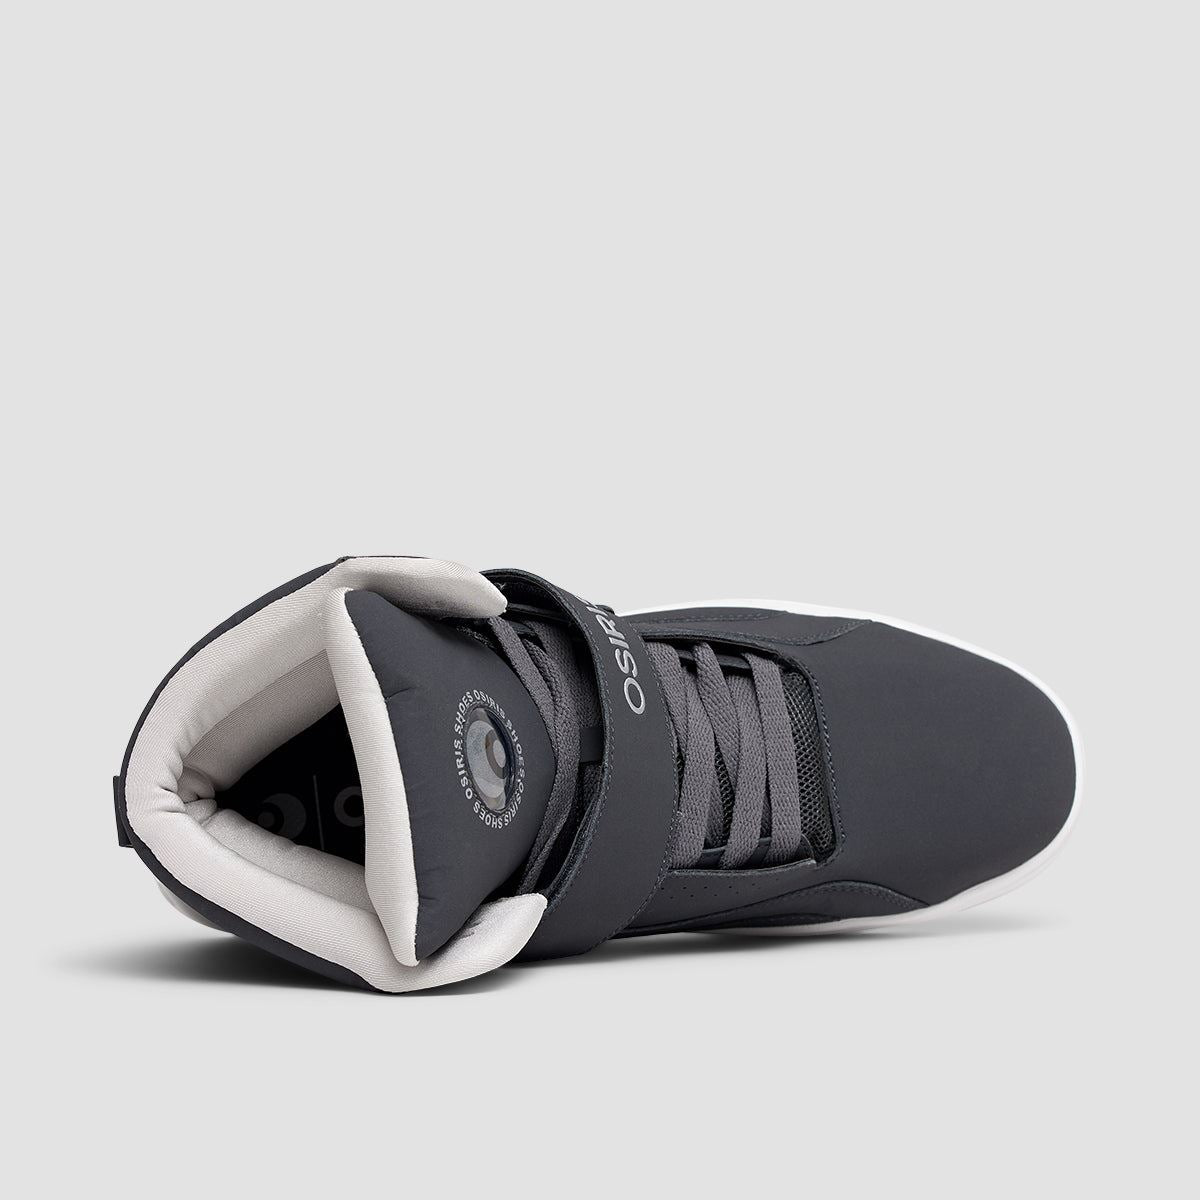 Osiris Rize Ultra High Top Shoes - Charcoal/White